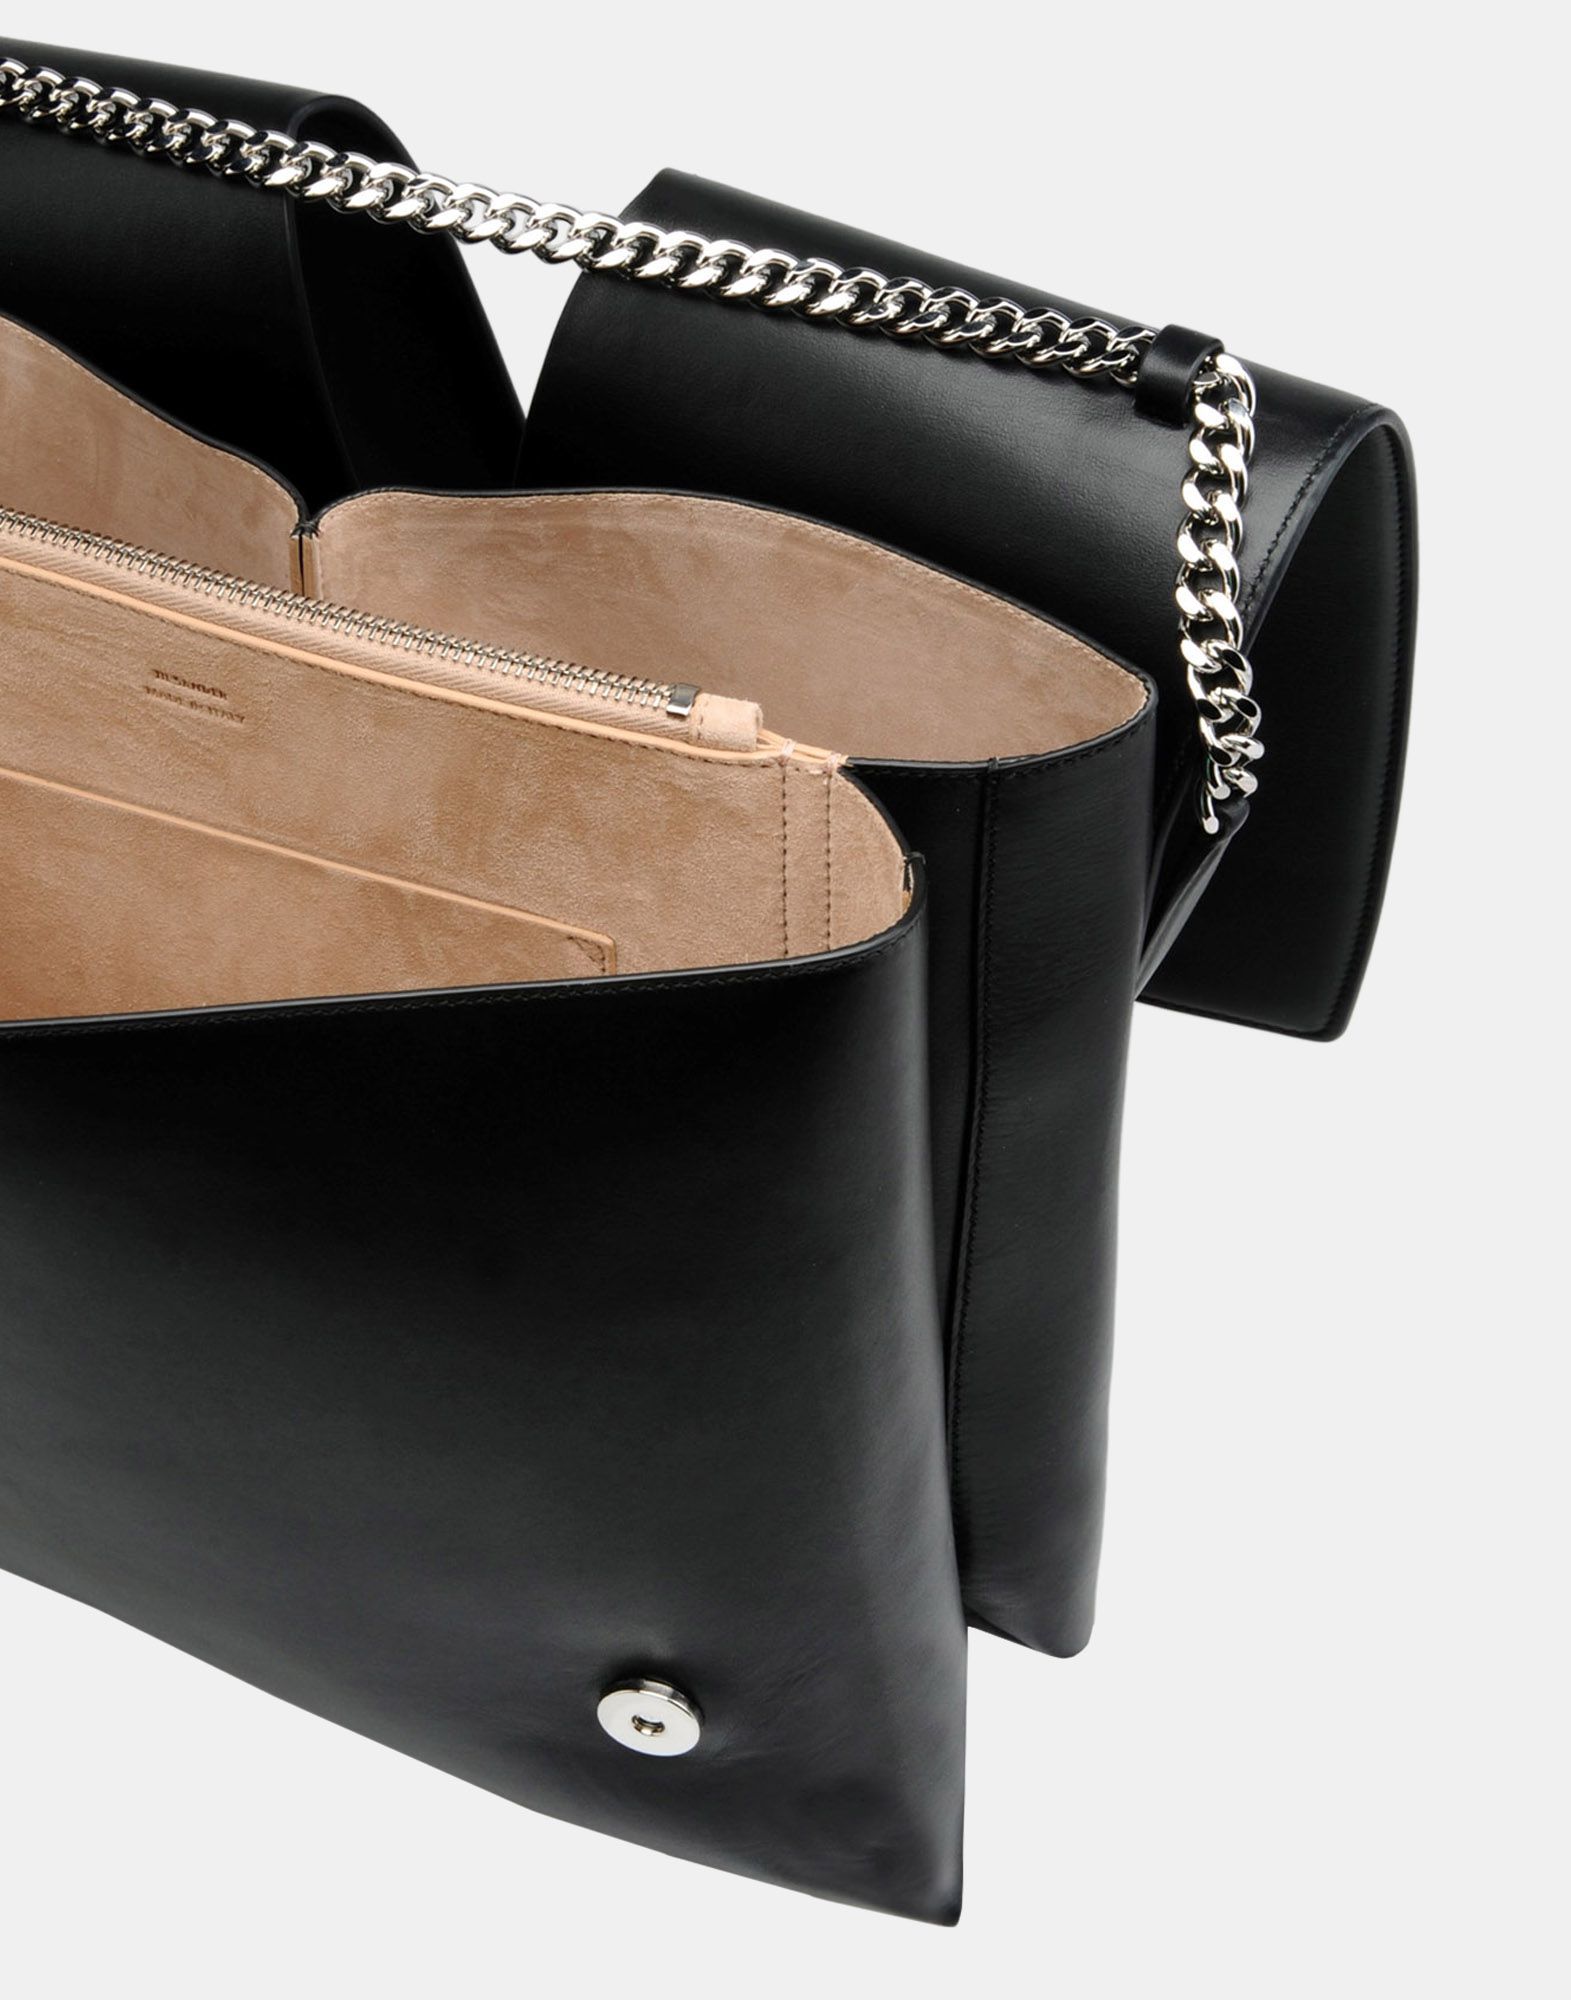 Shoulder bag Women - Bags Women on Jil Sander Online Store